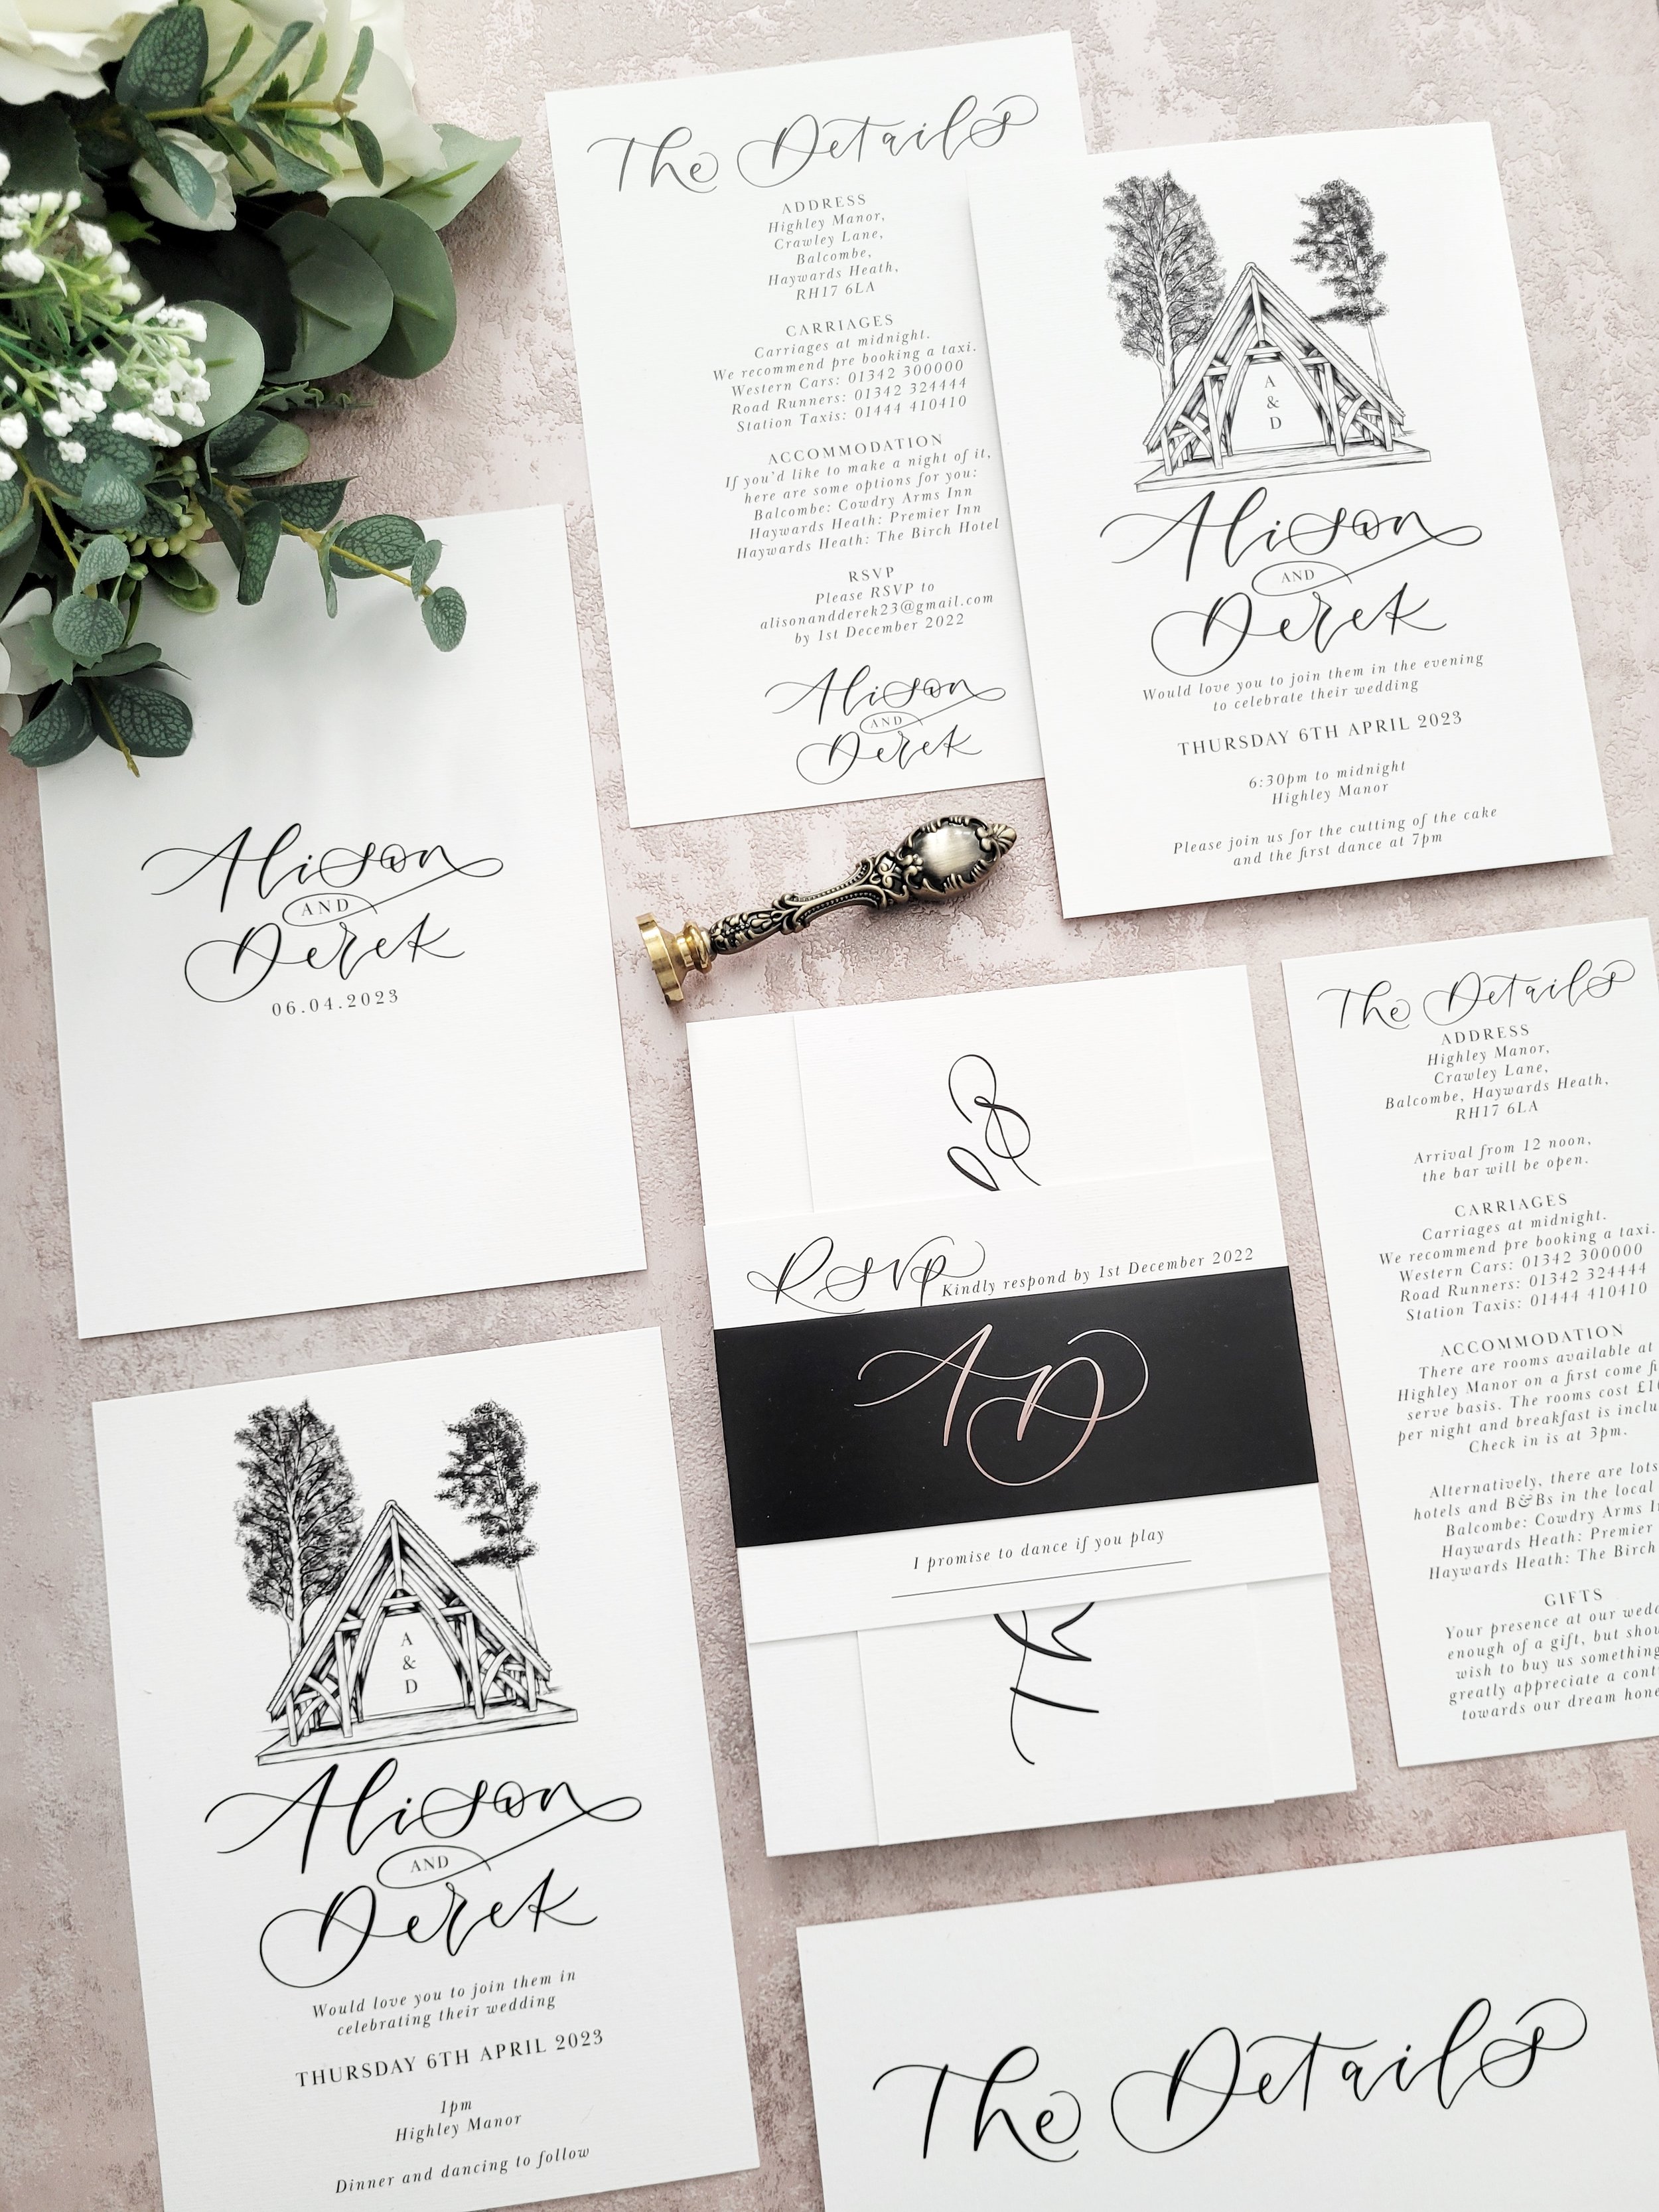 Highley Manor wedding stationery with venue illustration and modern calligraphy - monochrome minimalist invitation set - modern invitations.jpeg